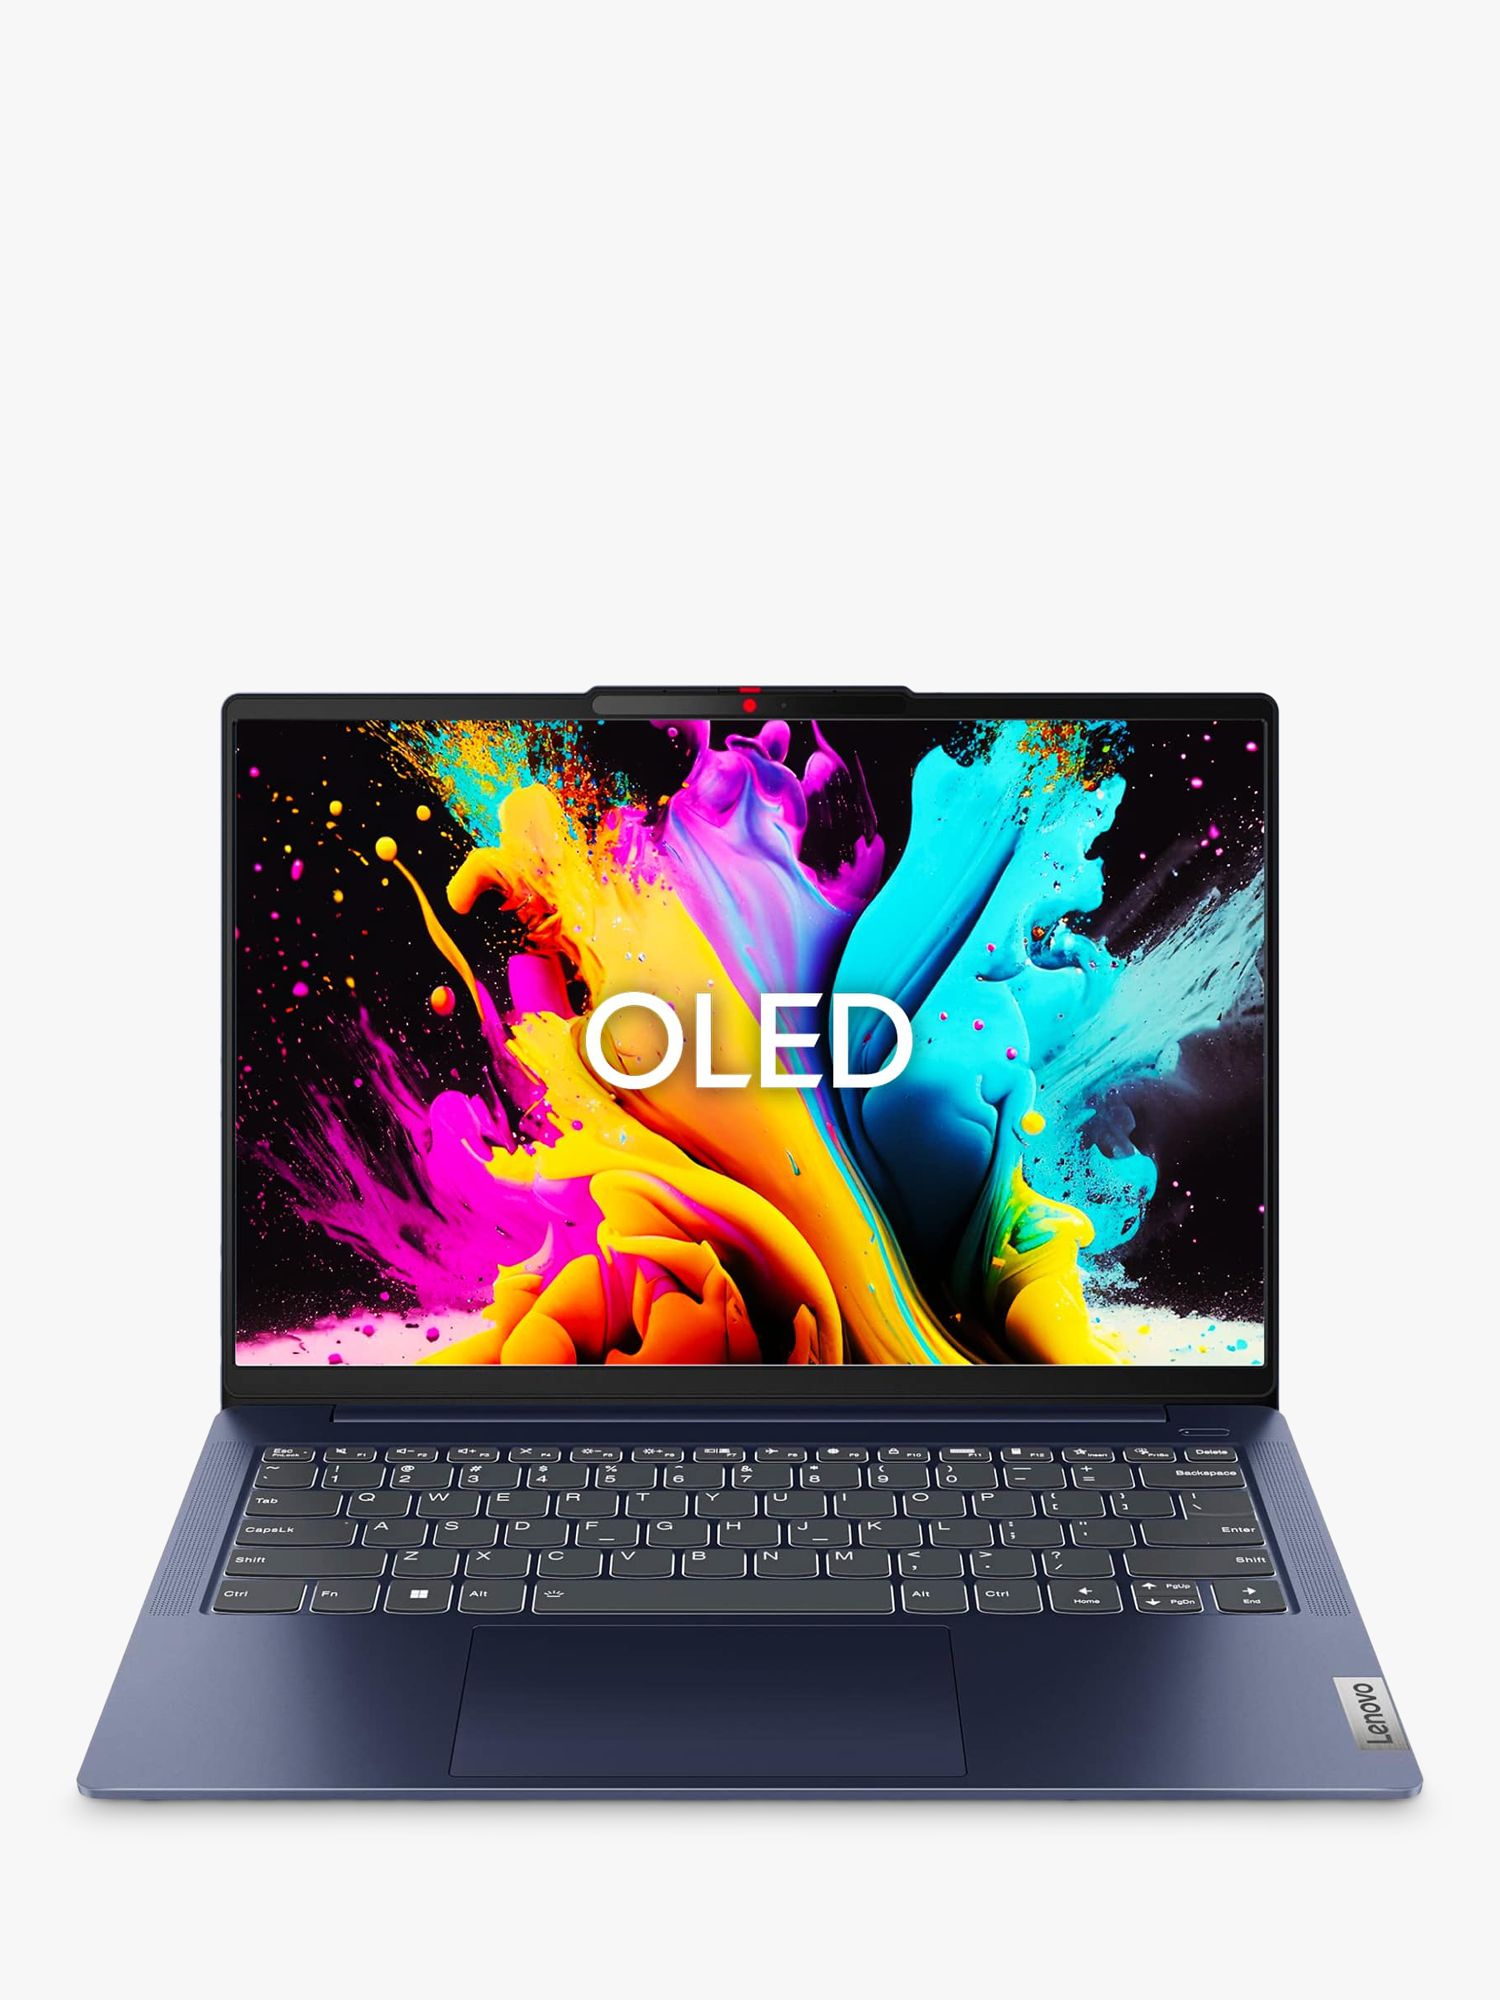 IdeaPad 3 (17) AMD Laptop, Powerful Everyday PC